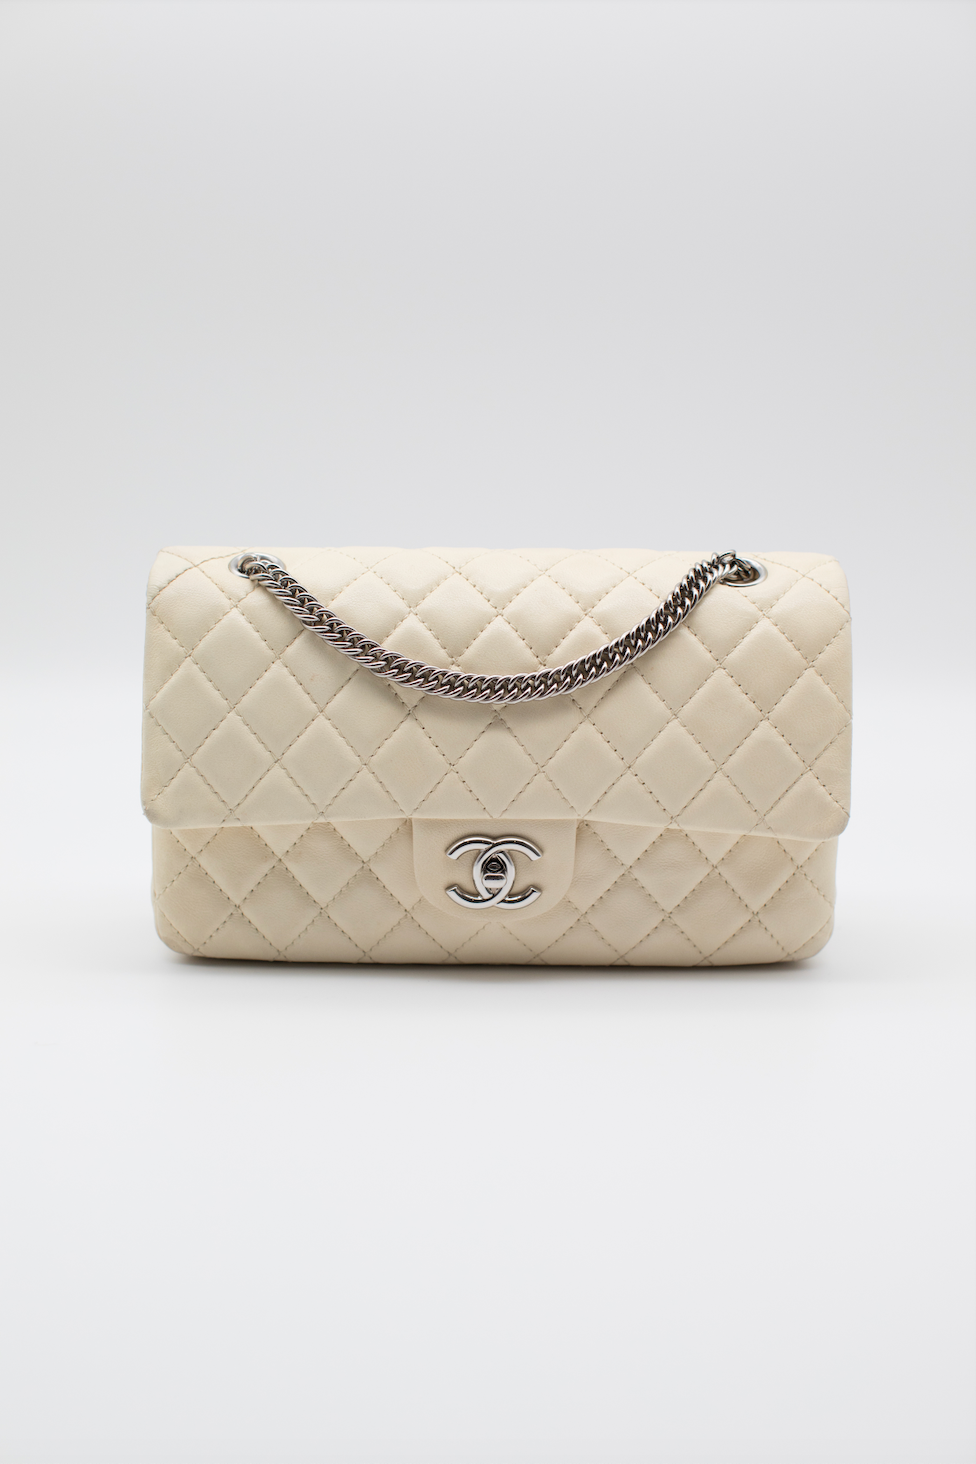 Pre-Loved Chanel Cream Medium Classic Flap – The Bag Lady